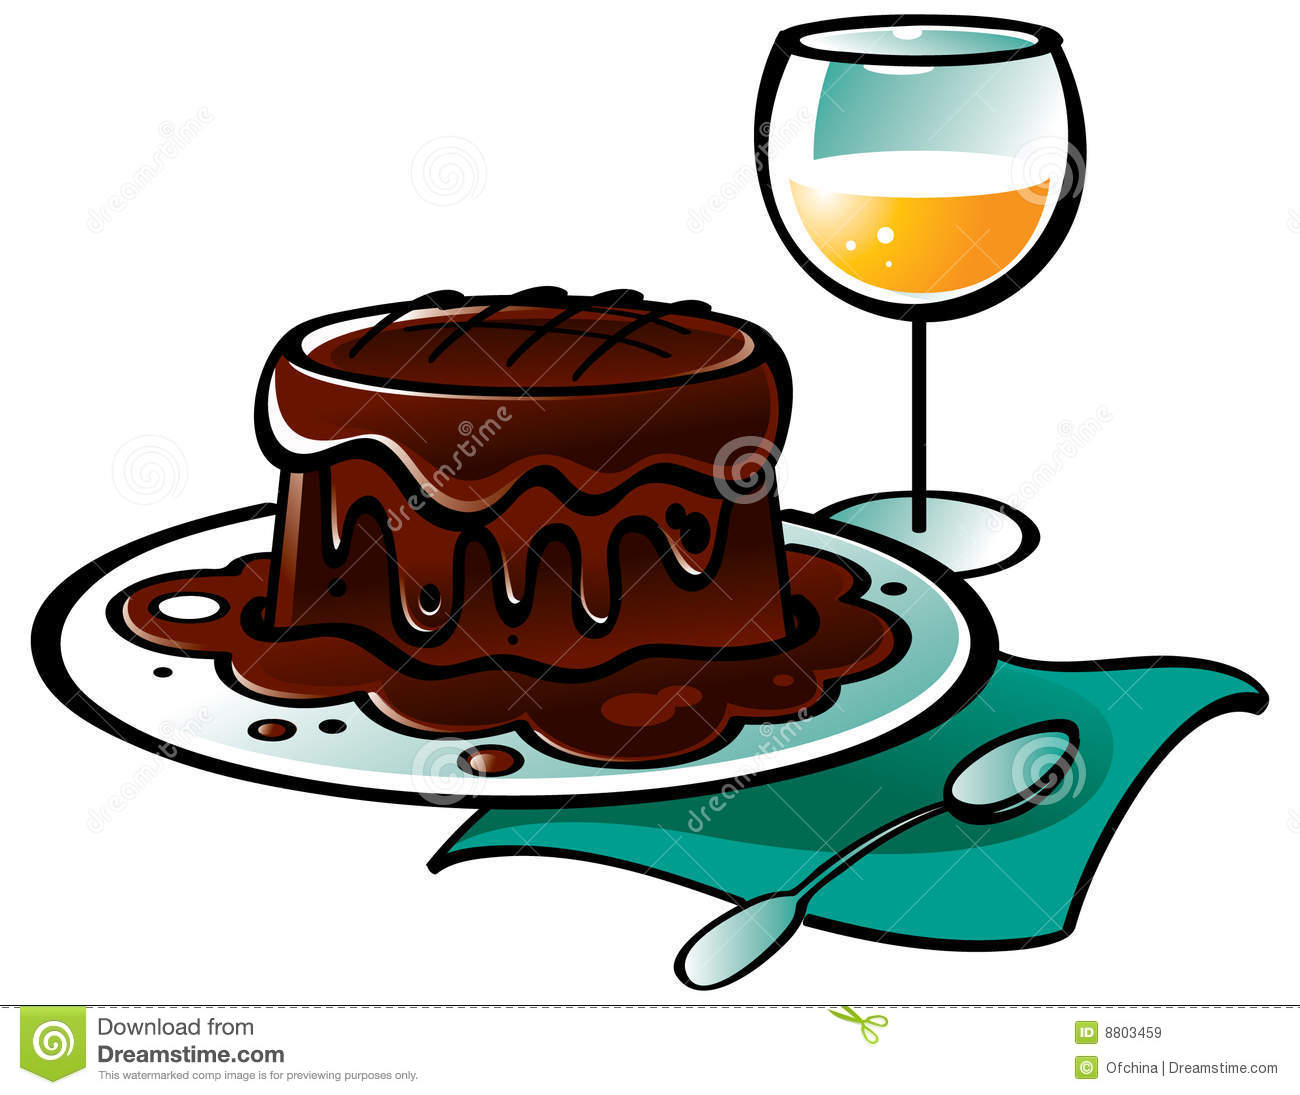 Chocolate Pudding Cake Royalty Free Stock Images   Image  8803459